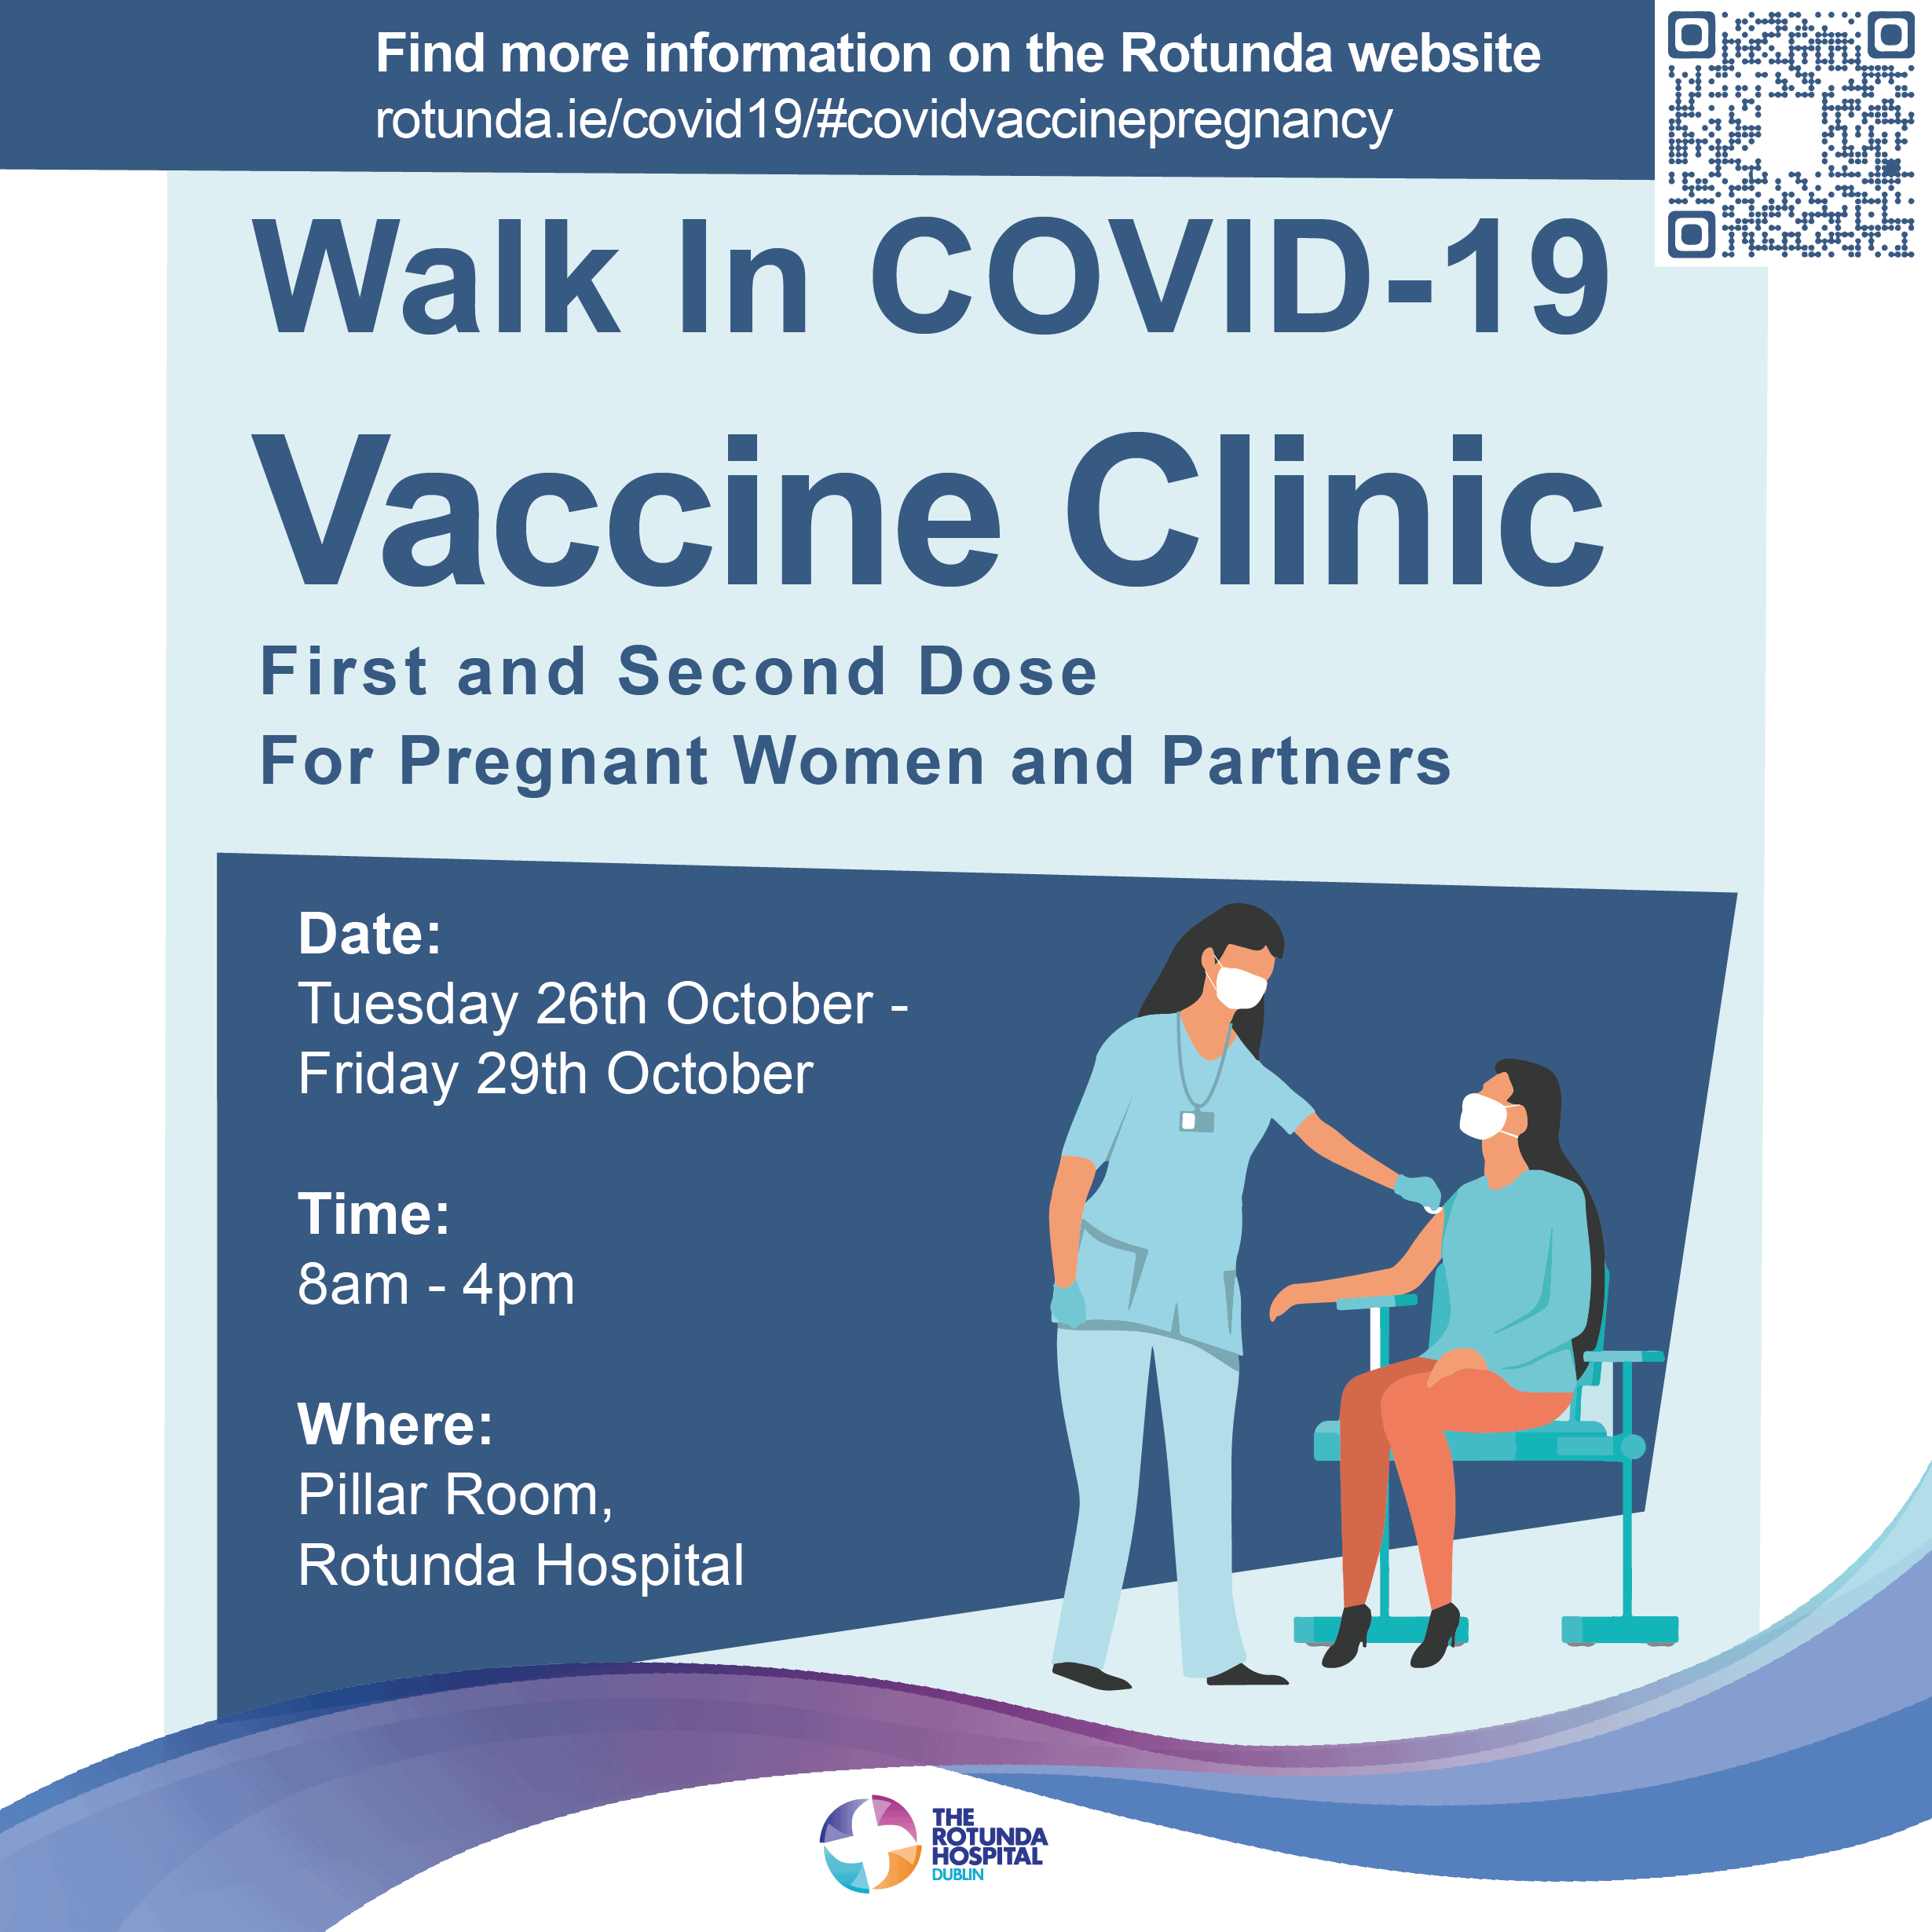 Walk-In COVID-19 Vaccination Clinic at The Rotunda